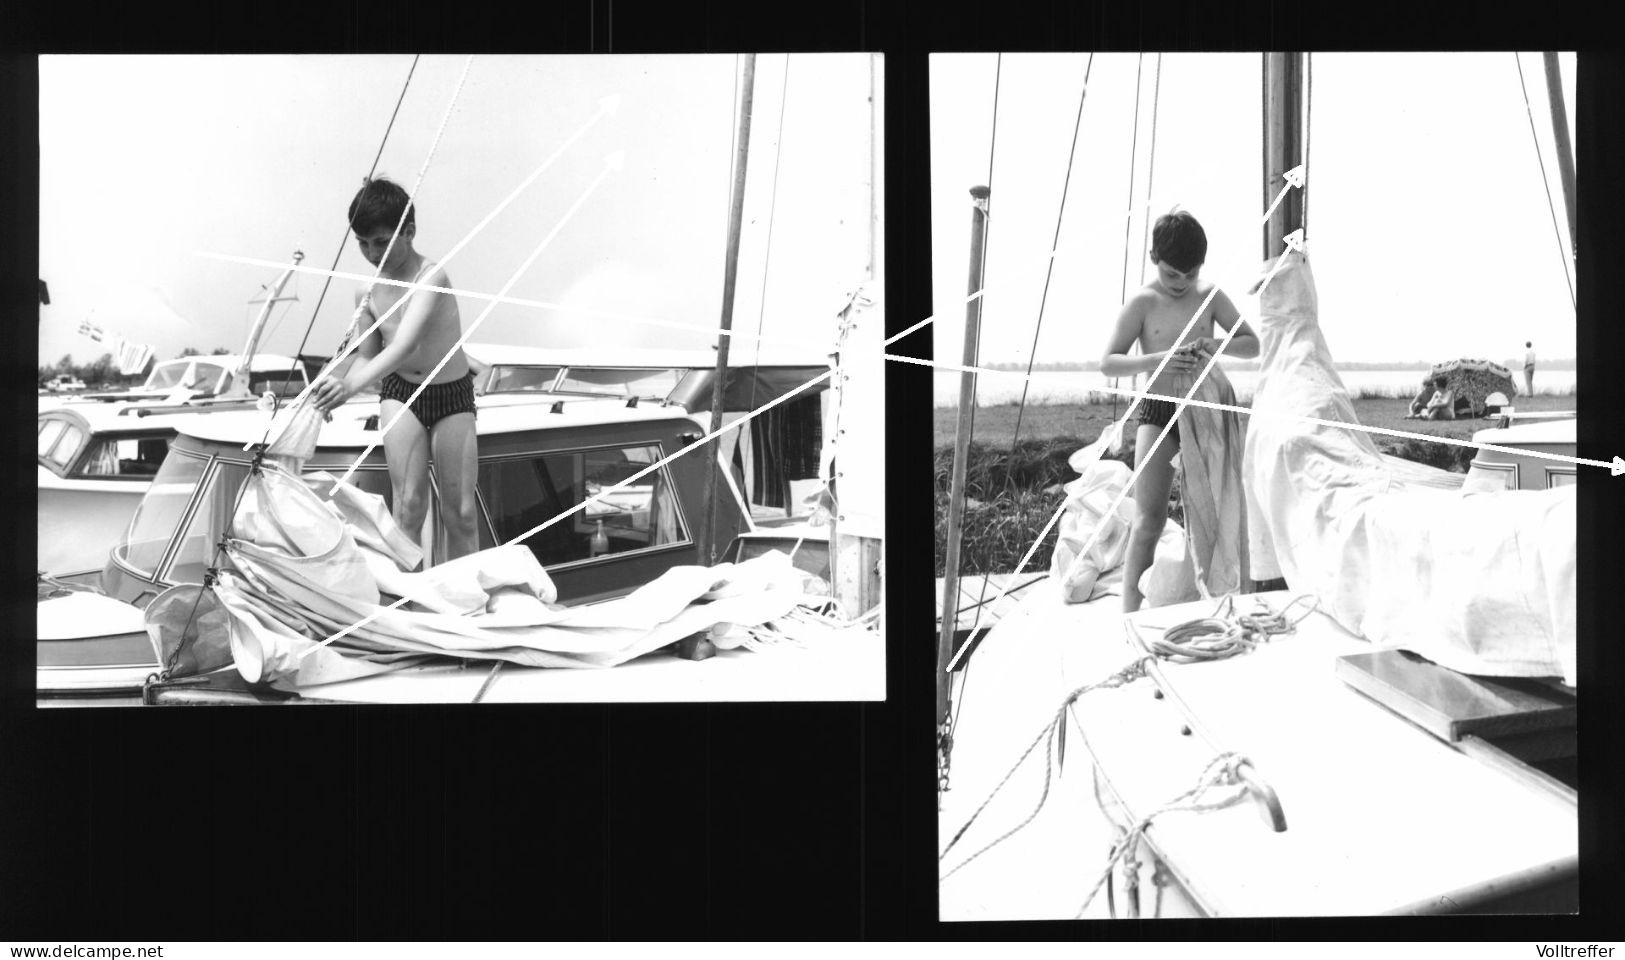 2x Orig. XL Foto 60er Jahre Portrait Süßer Junge Arbeitet Auf Boot, Cute Boy With Working On Sailing Ship Beach Fashion - Personnes Anonymes